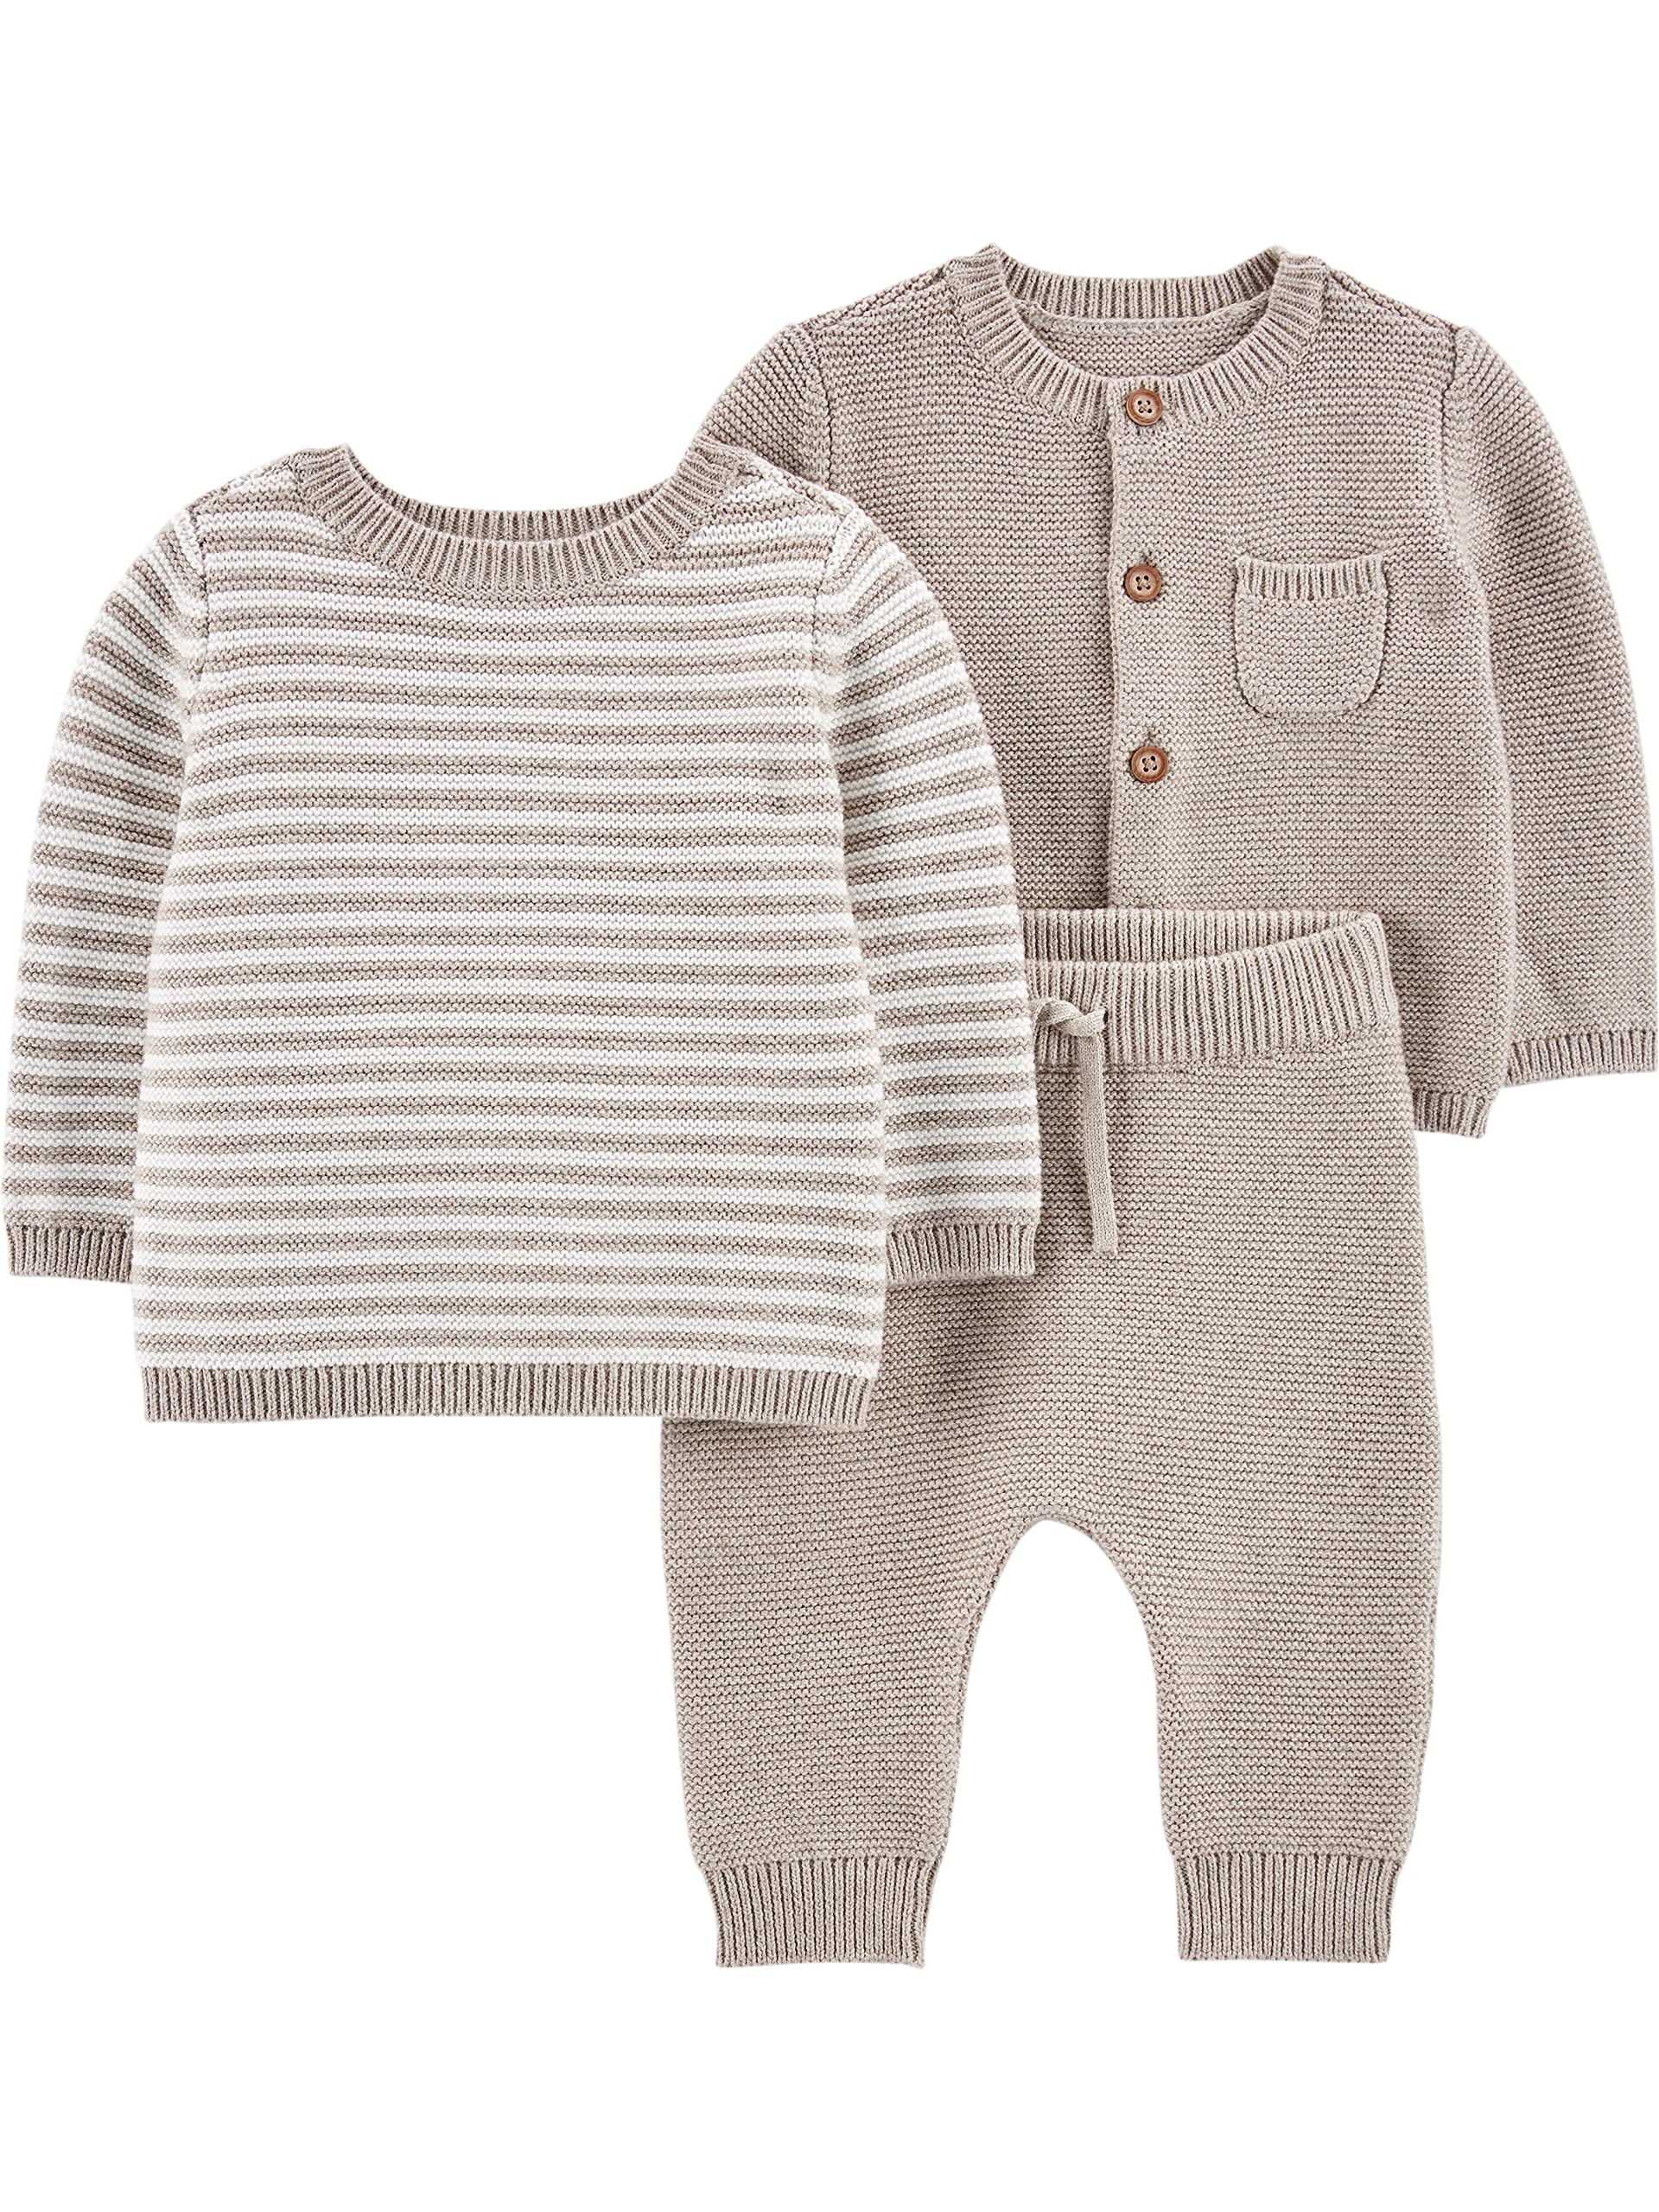 Simple Joys by Carter's Unisex Babies' 3-Piece Sweater Set